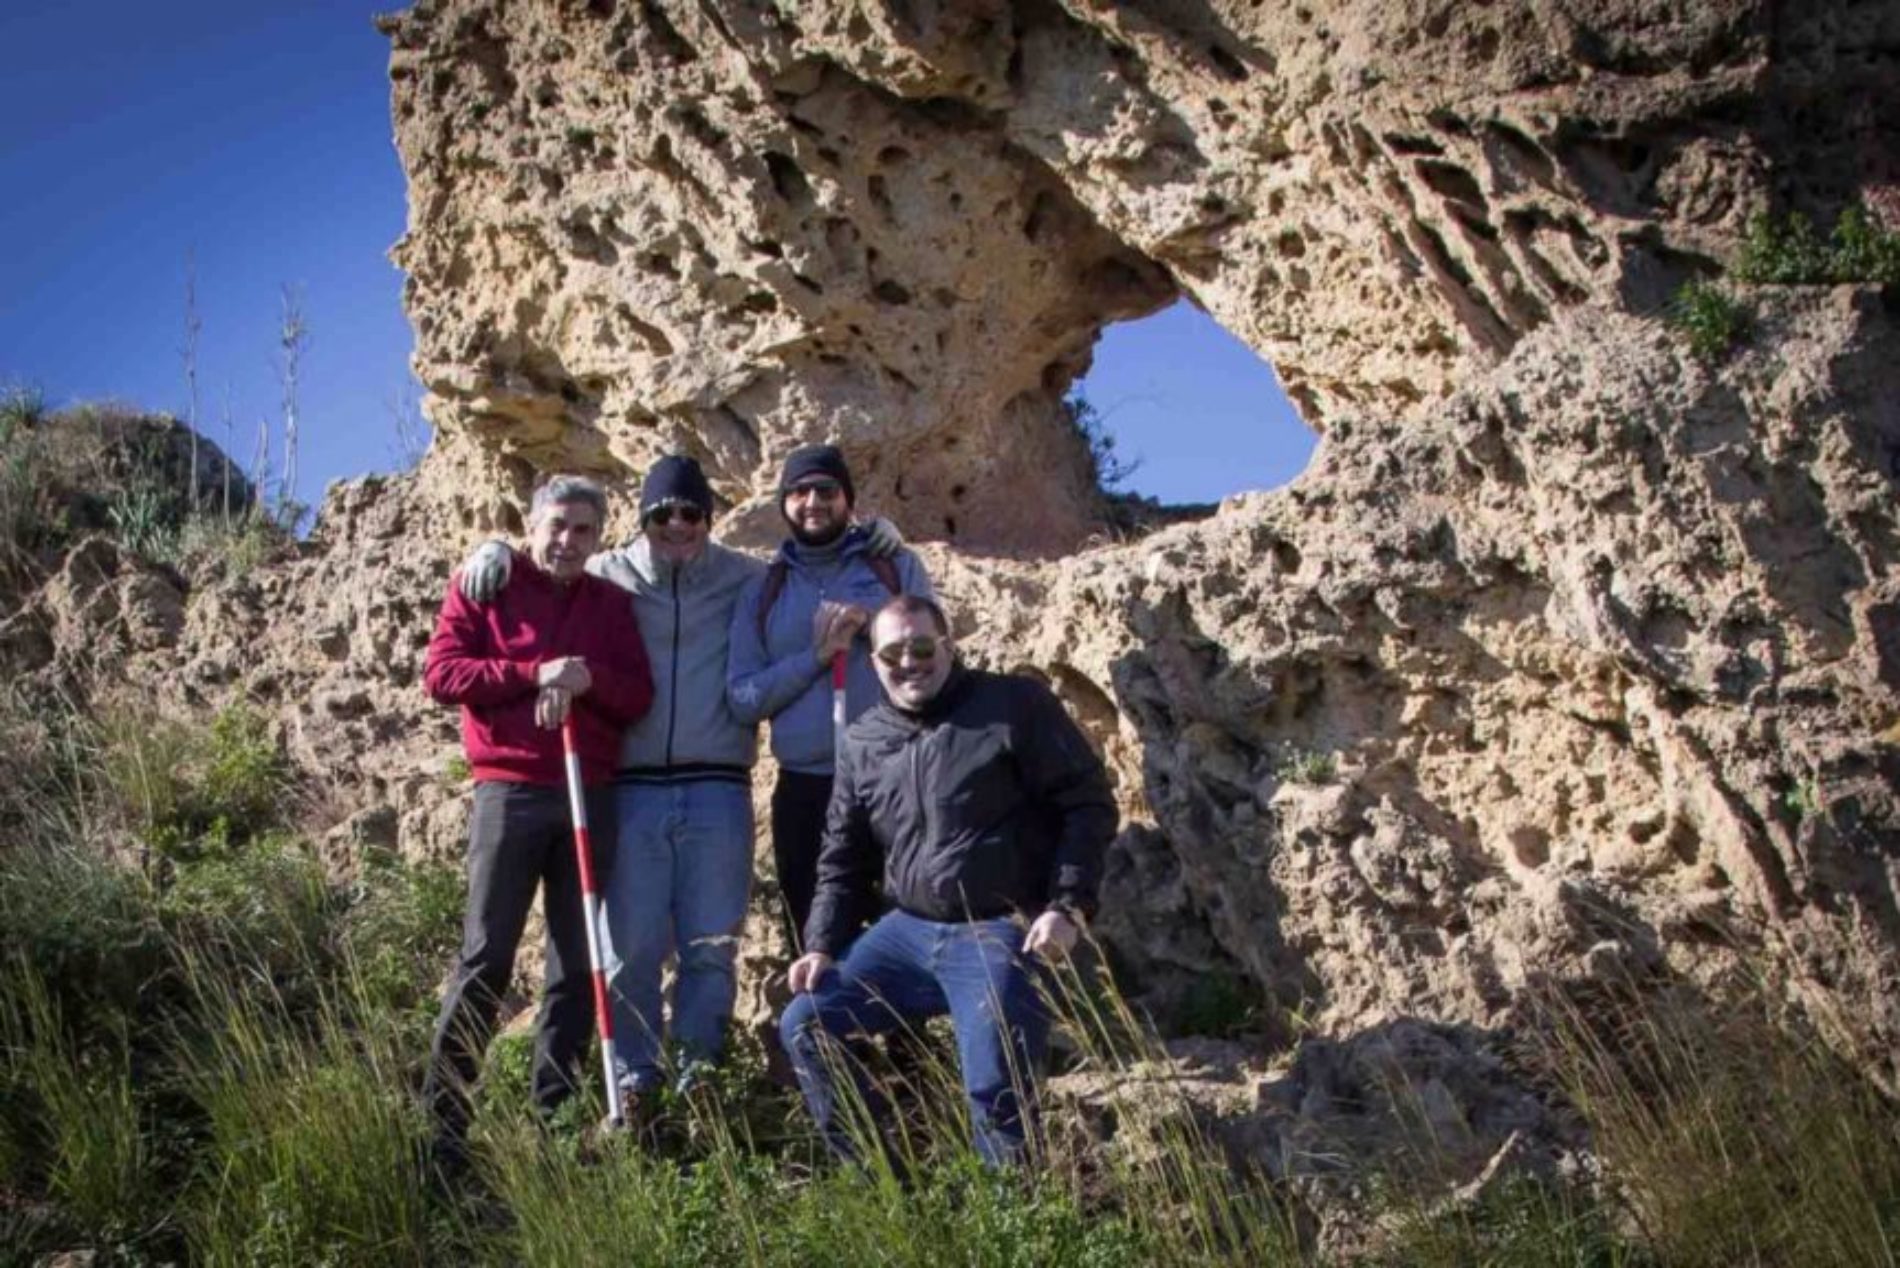 Eccezionale scoperta a Gela: emerge una “piccola stonehenge”